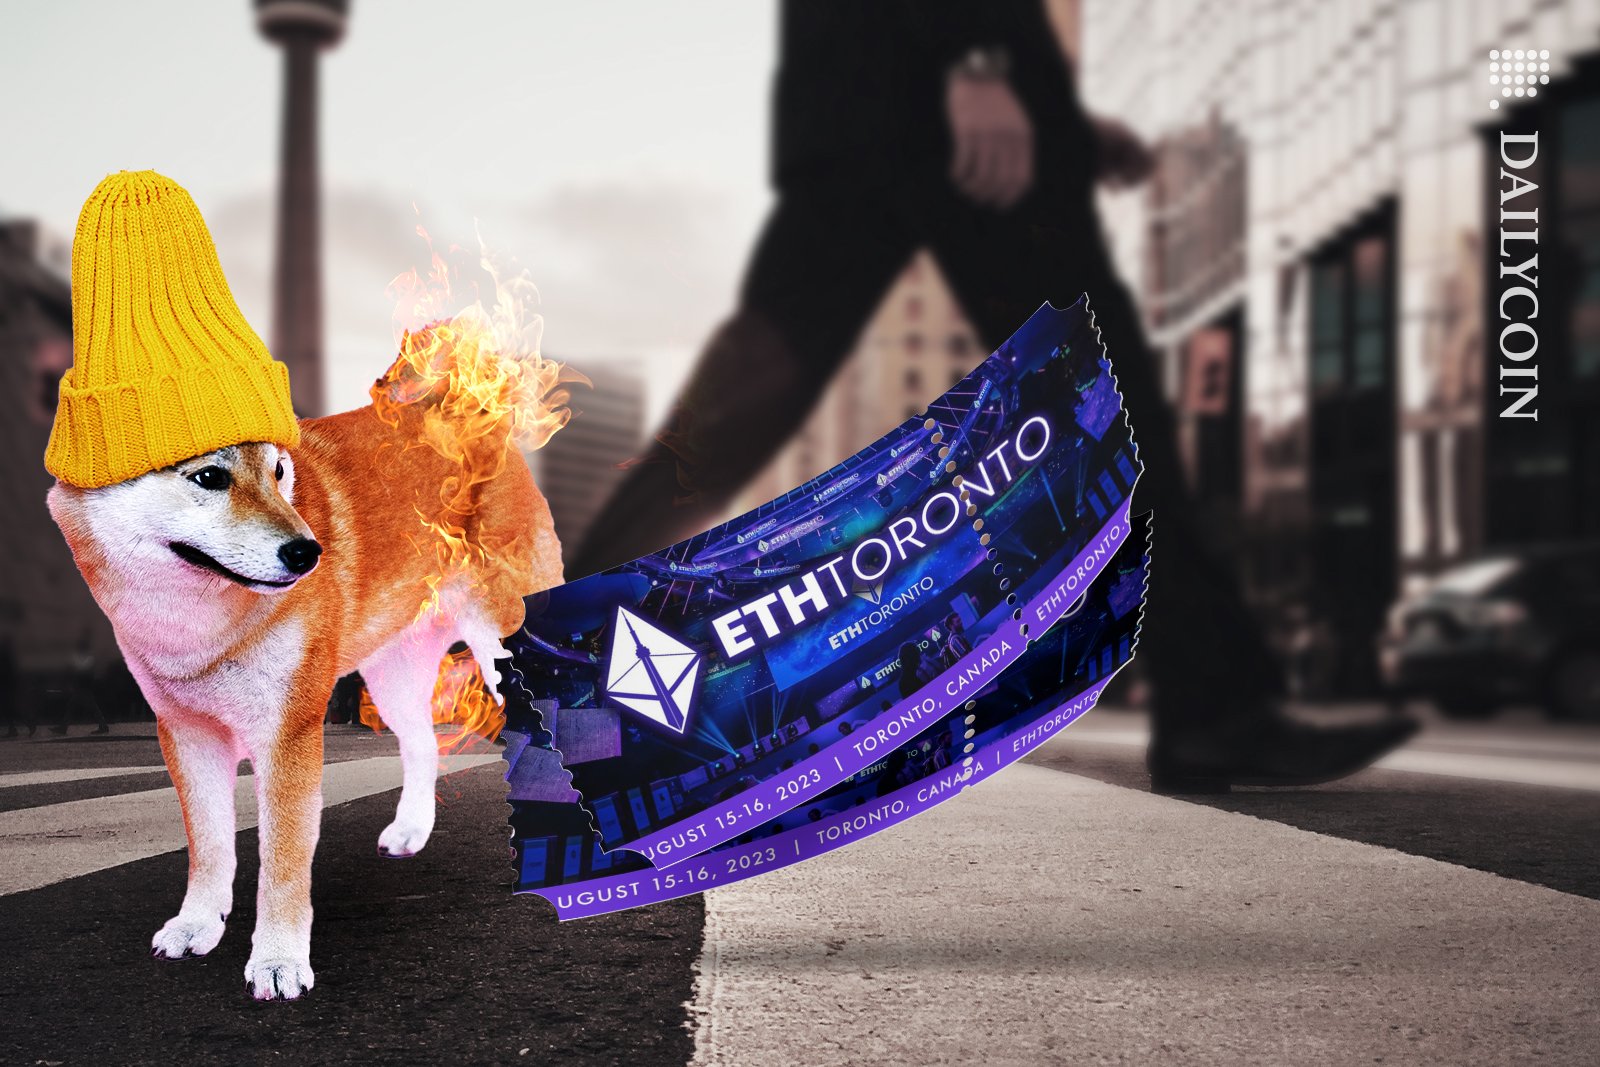 Shiba Inu burning in Toronto, as he sees ETHTORONTO tickets.